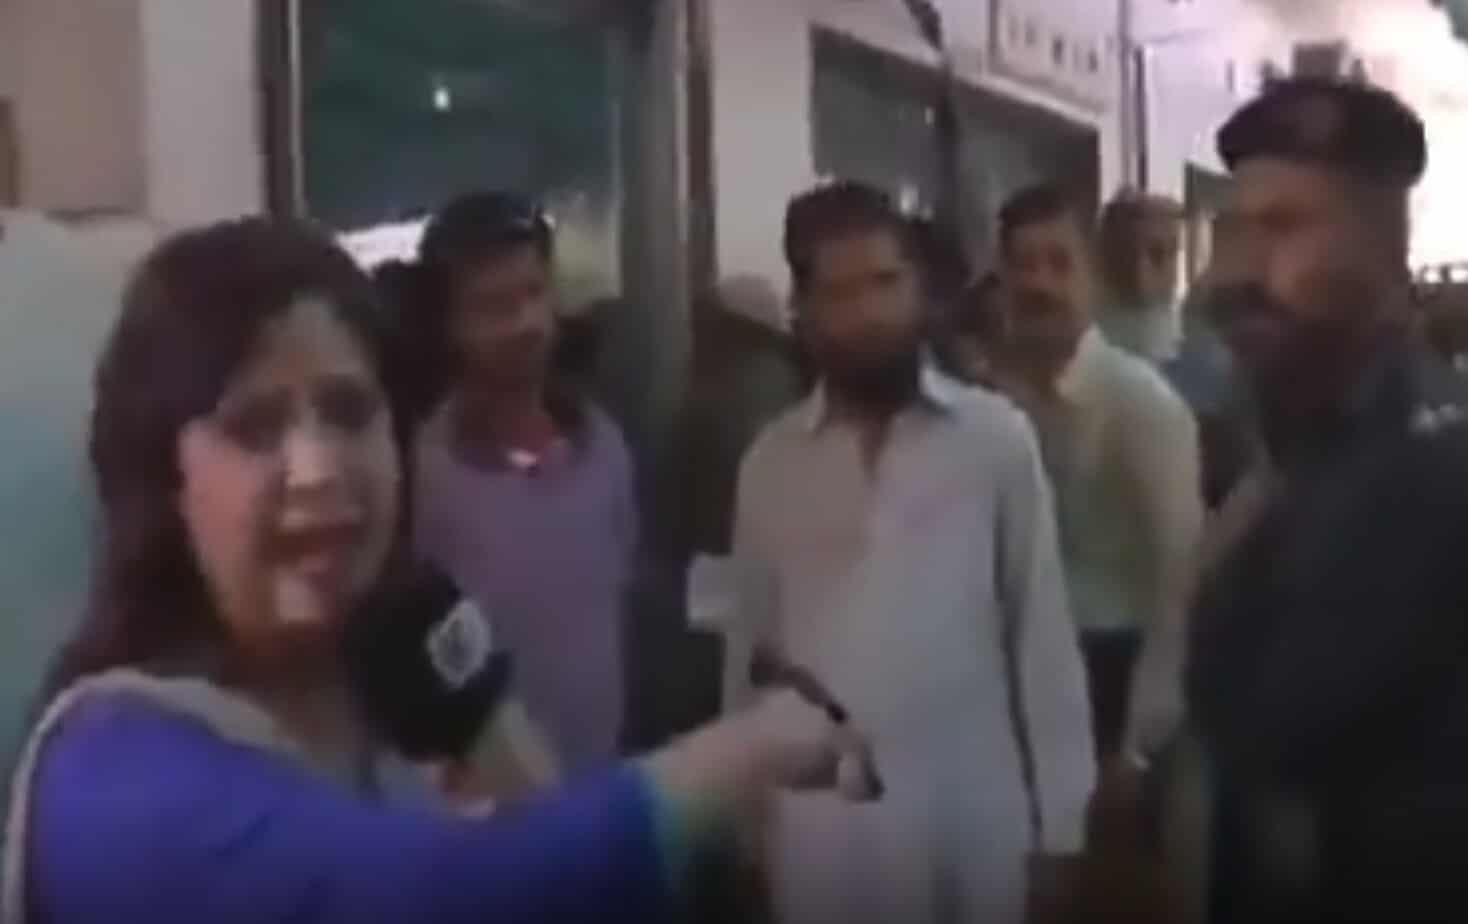                               Policeman slaps female journalist in Pakistan when exposed                             
                              